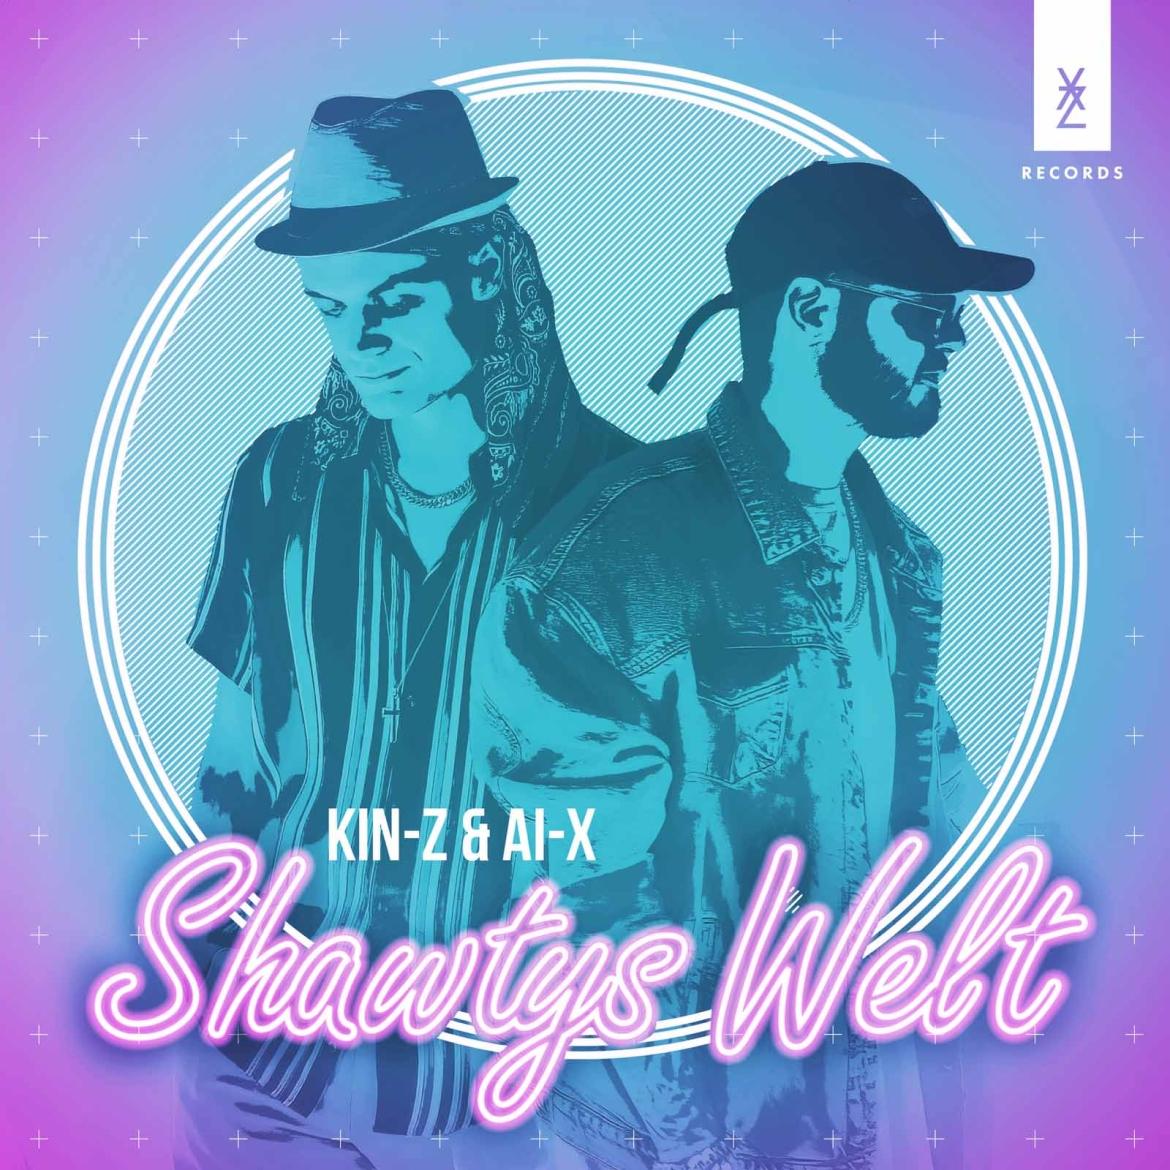 Shawtys Welt Single Cover